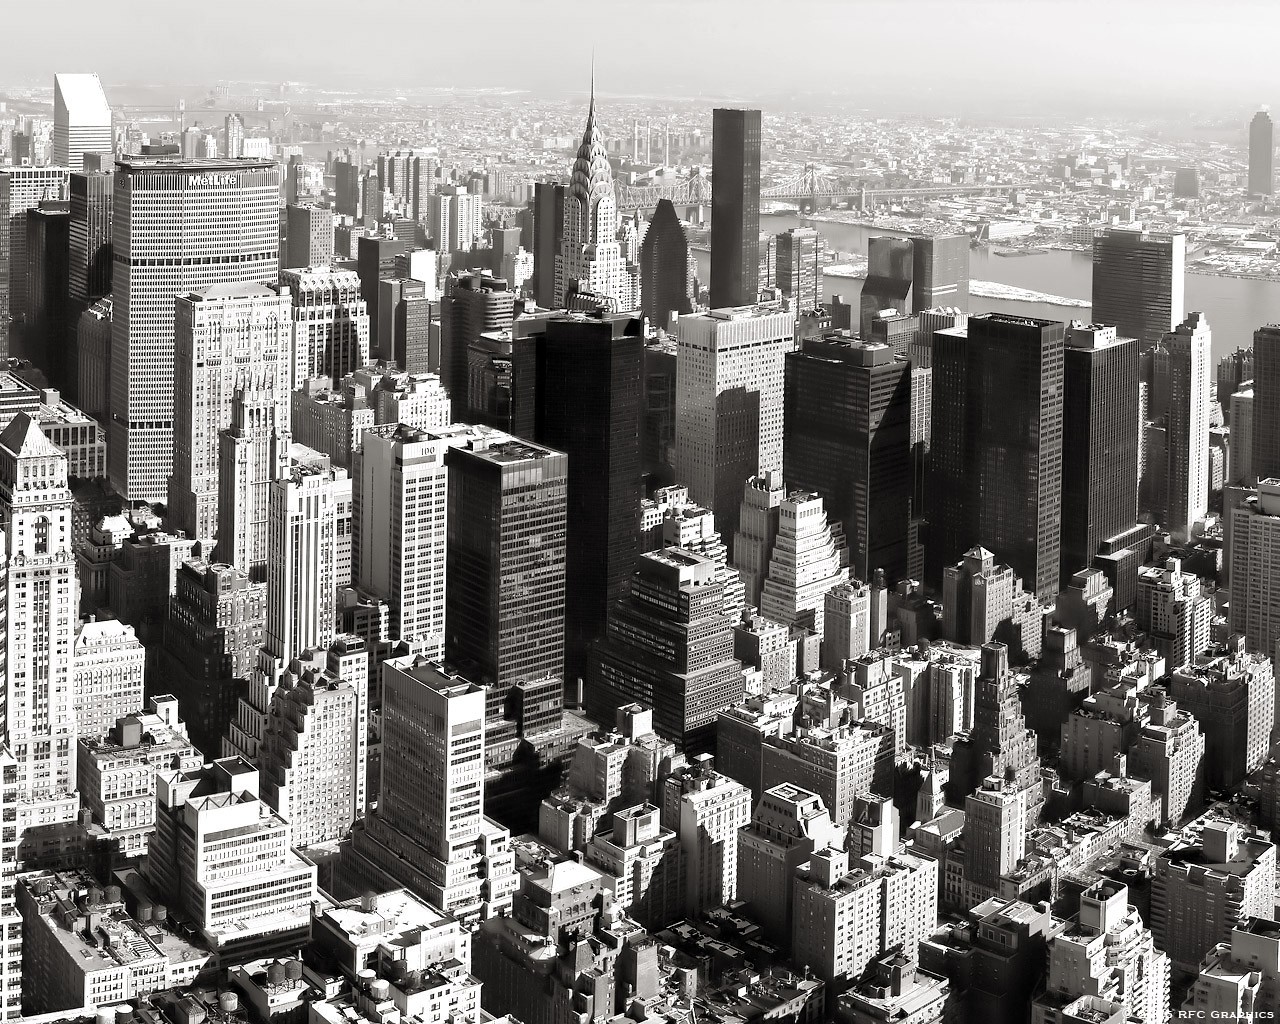 General 1280x1024 city cityscape New York City USA Manhattan aerial view urban skyscraper vintage monochrome